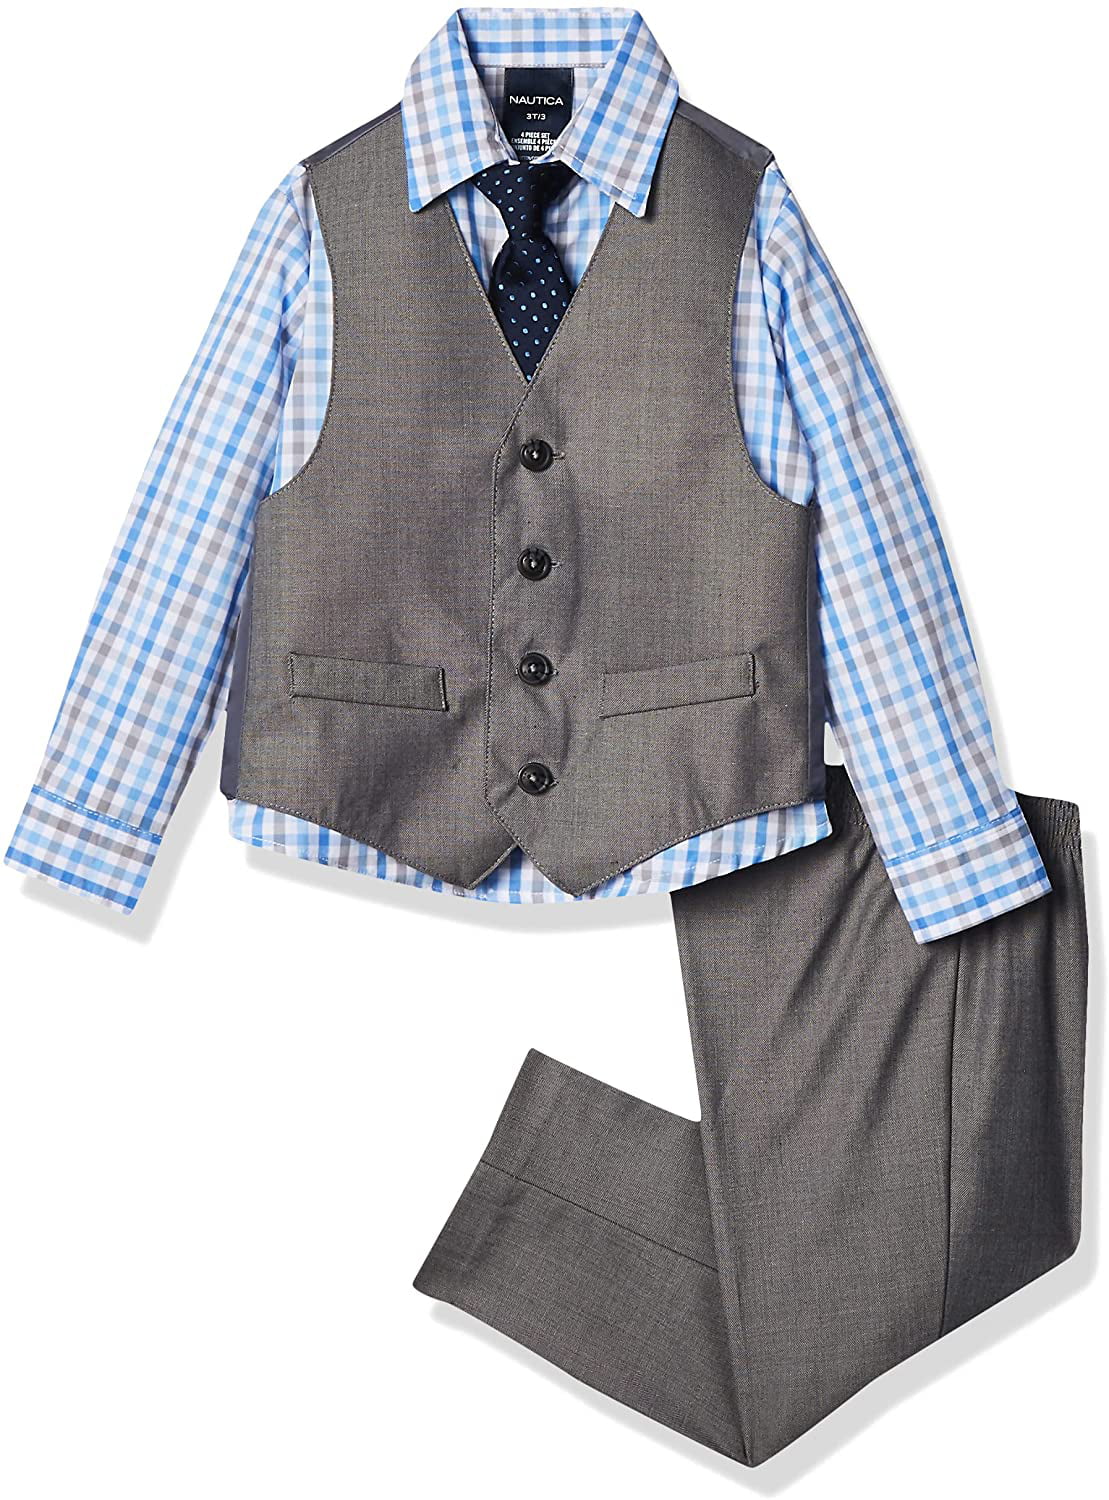 Tie and Pants Nautica Boys' 4-Piece Set with Dress Shirt Vest